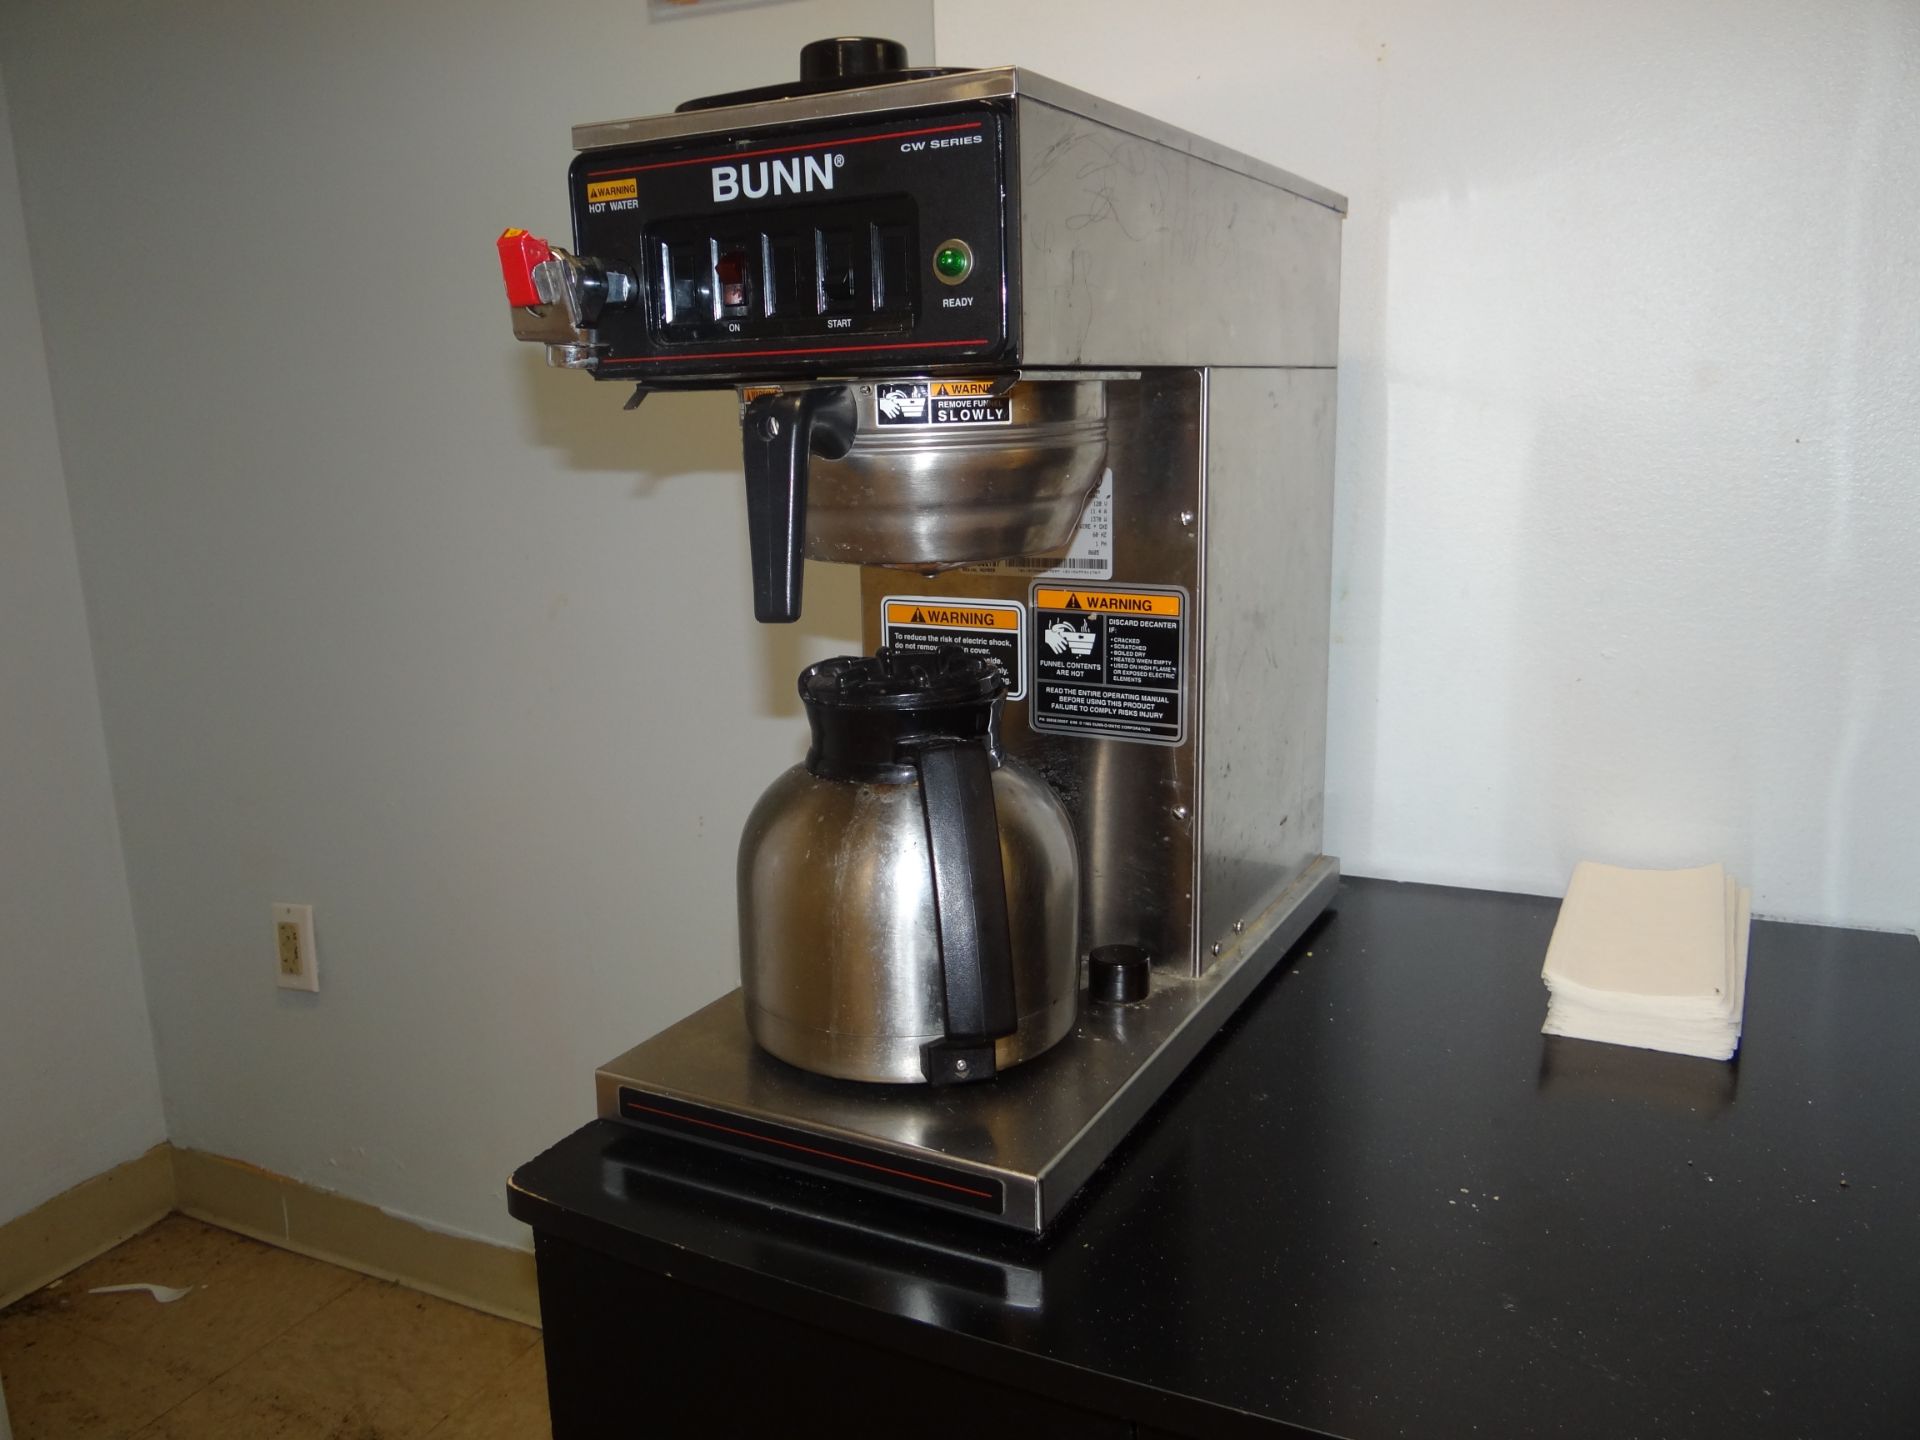 (1) Bunn Thermal Coffee Maker CWTF15-TC.